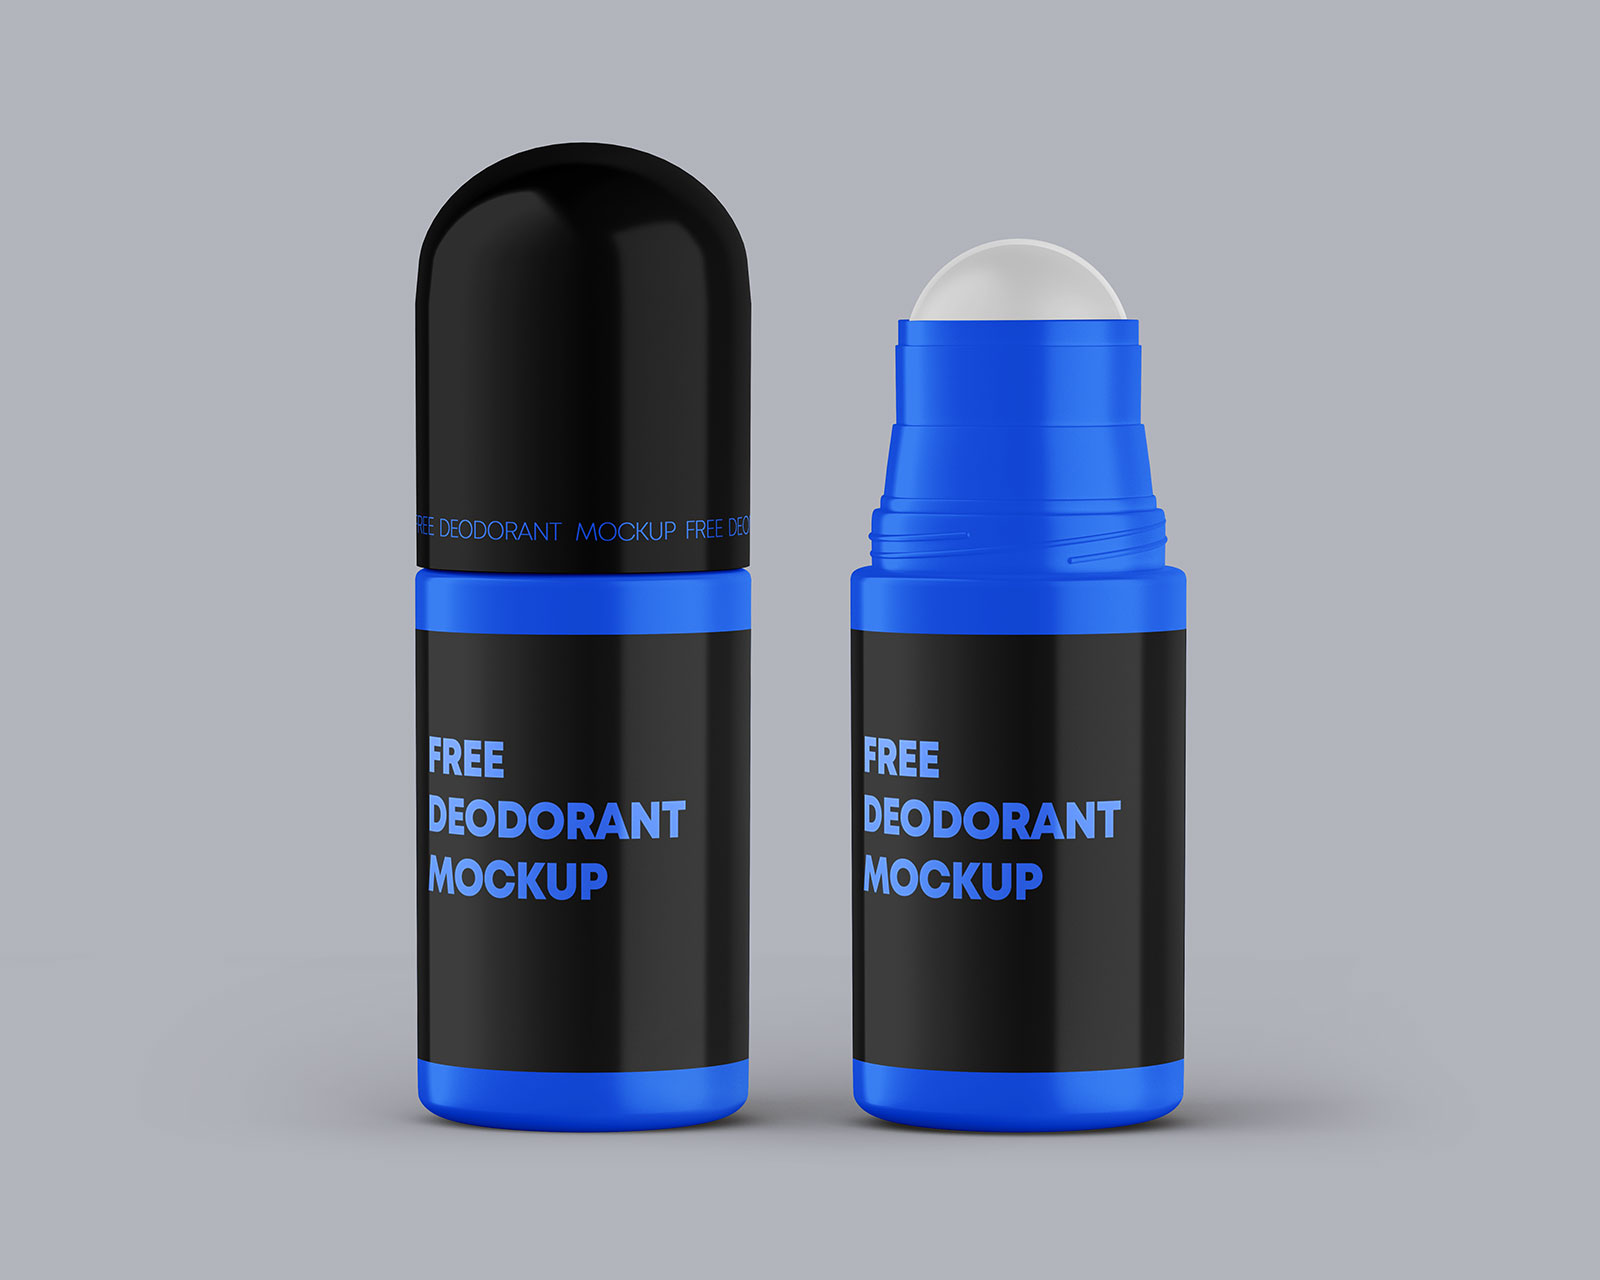 Free Men's Deodorant Bottle Mockup PSD